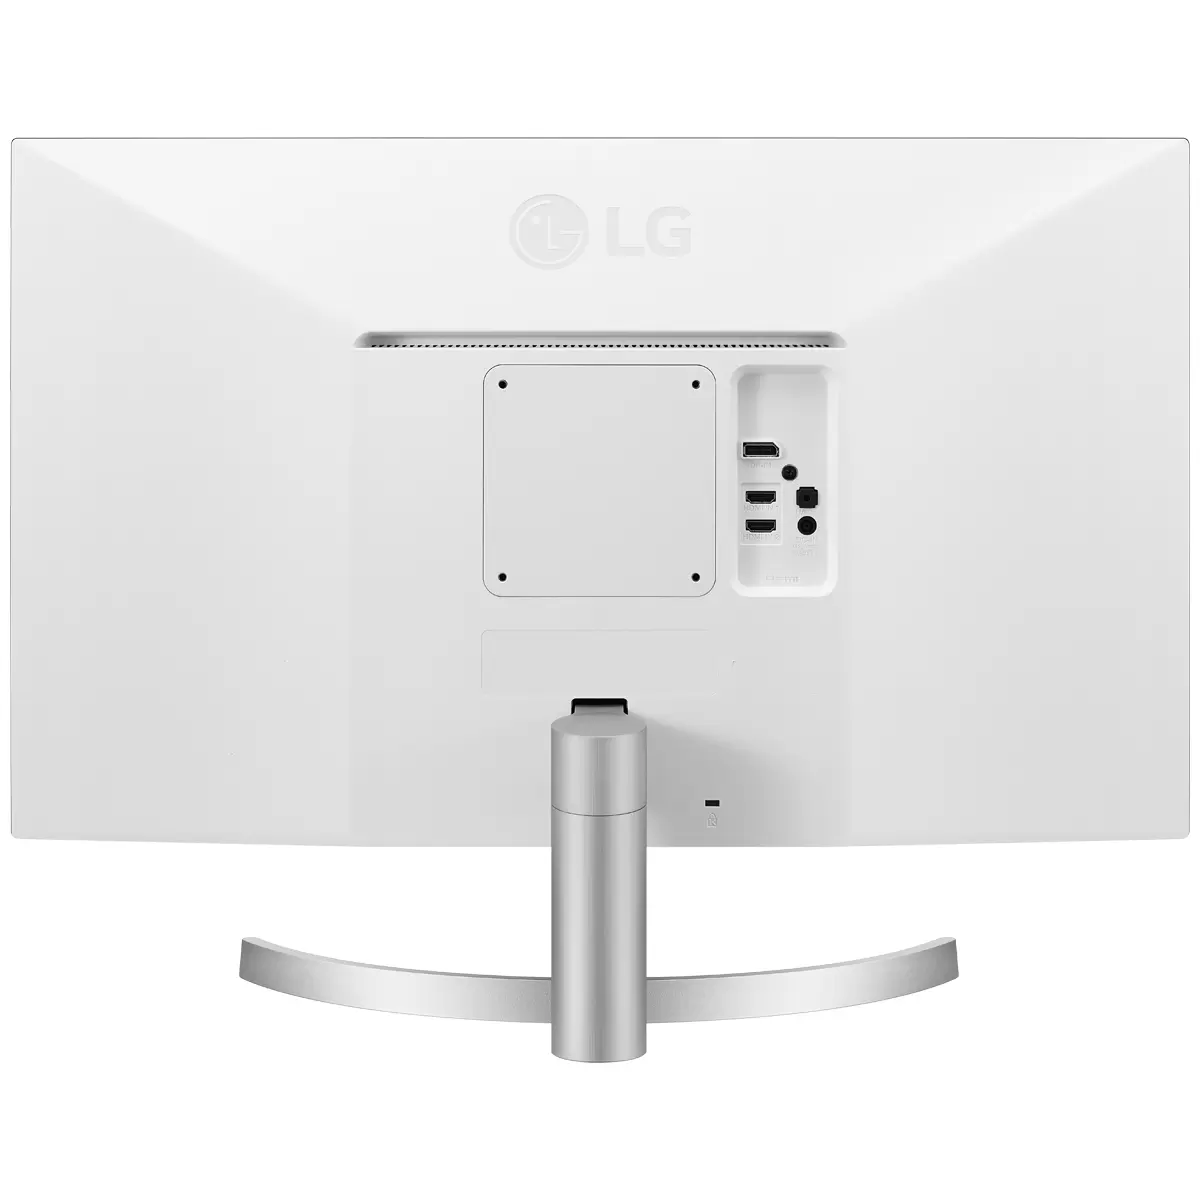 LG 27 inch UHD 4K IPS Monitor with HDR10 27UL500-W